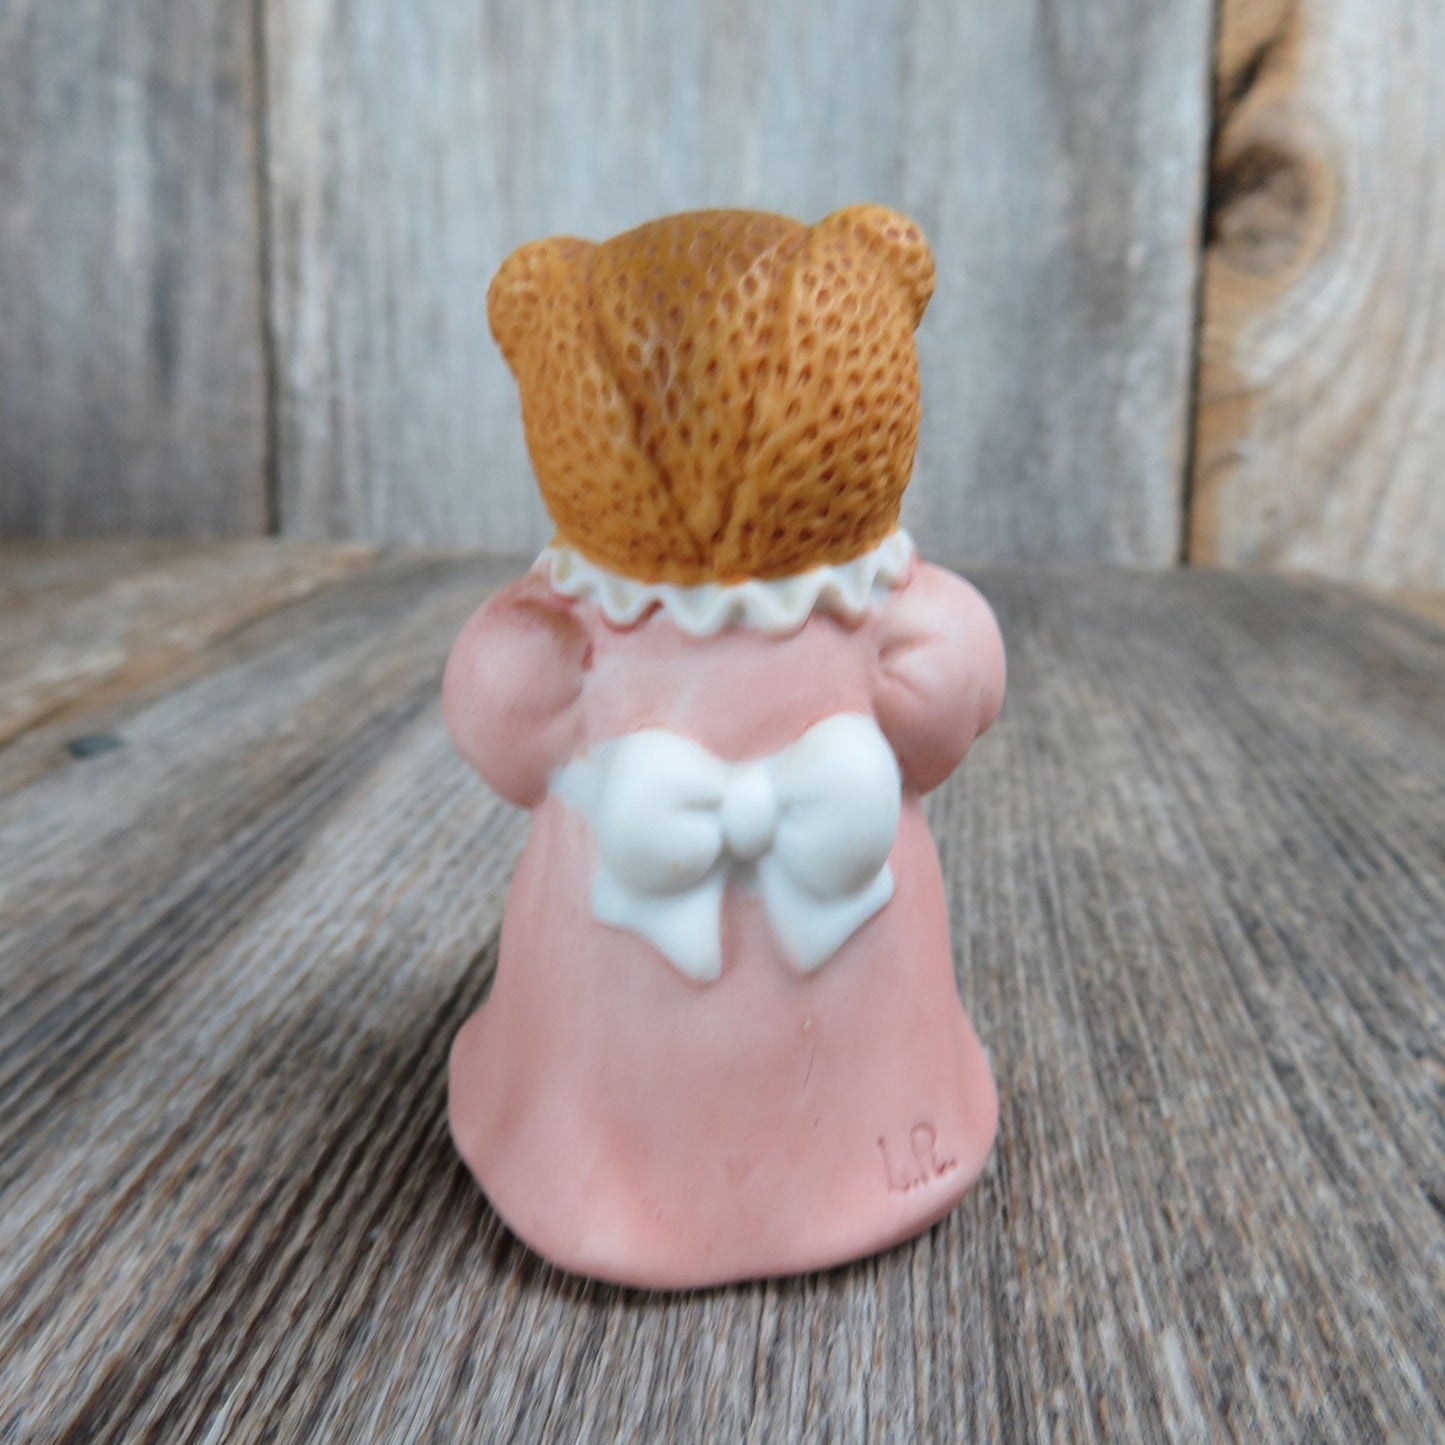 Bear Bride Figurine Bridal Shower Cake Topper Ceramic Bisque Lucy Rigg Enesco 1986 Maid's Gift